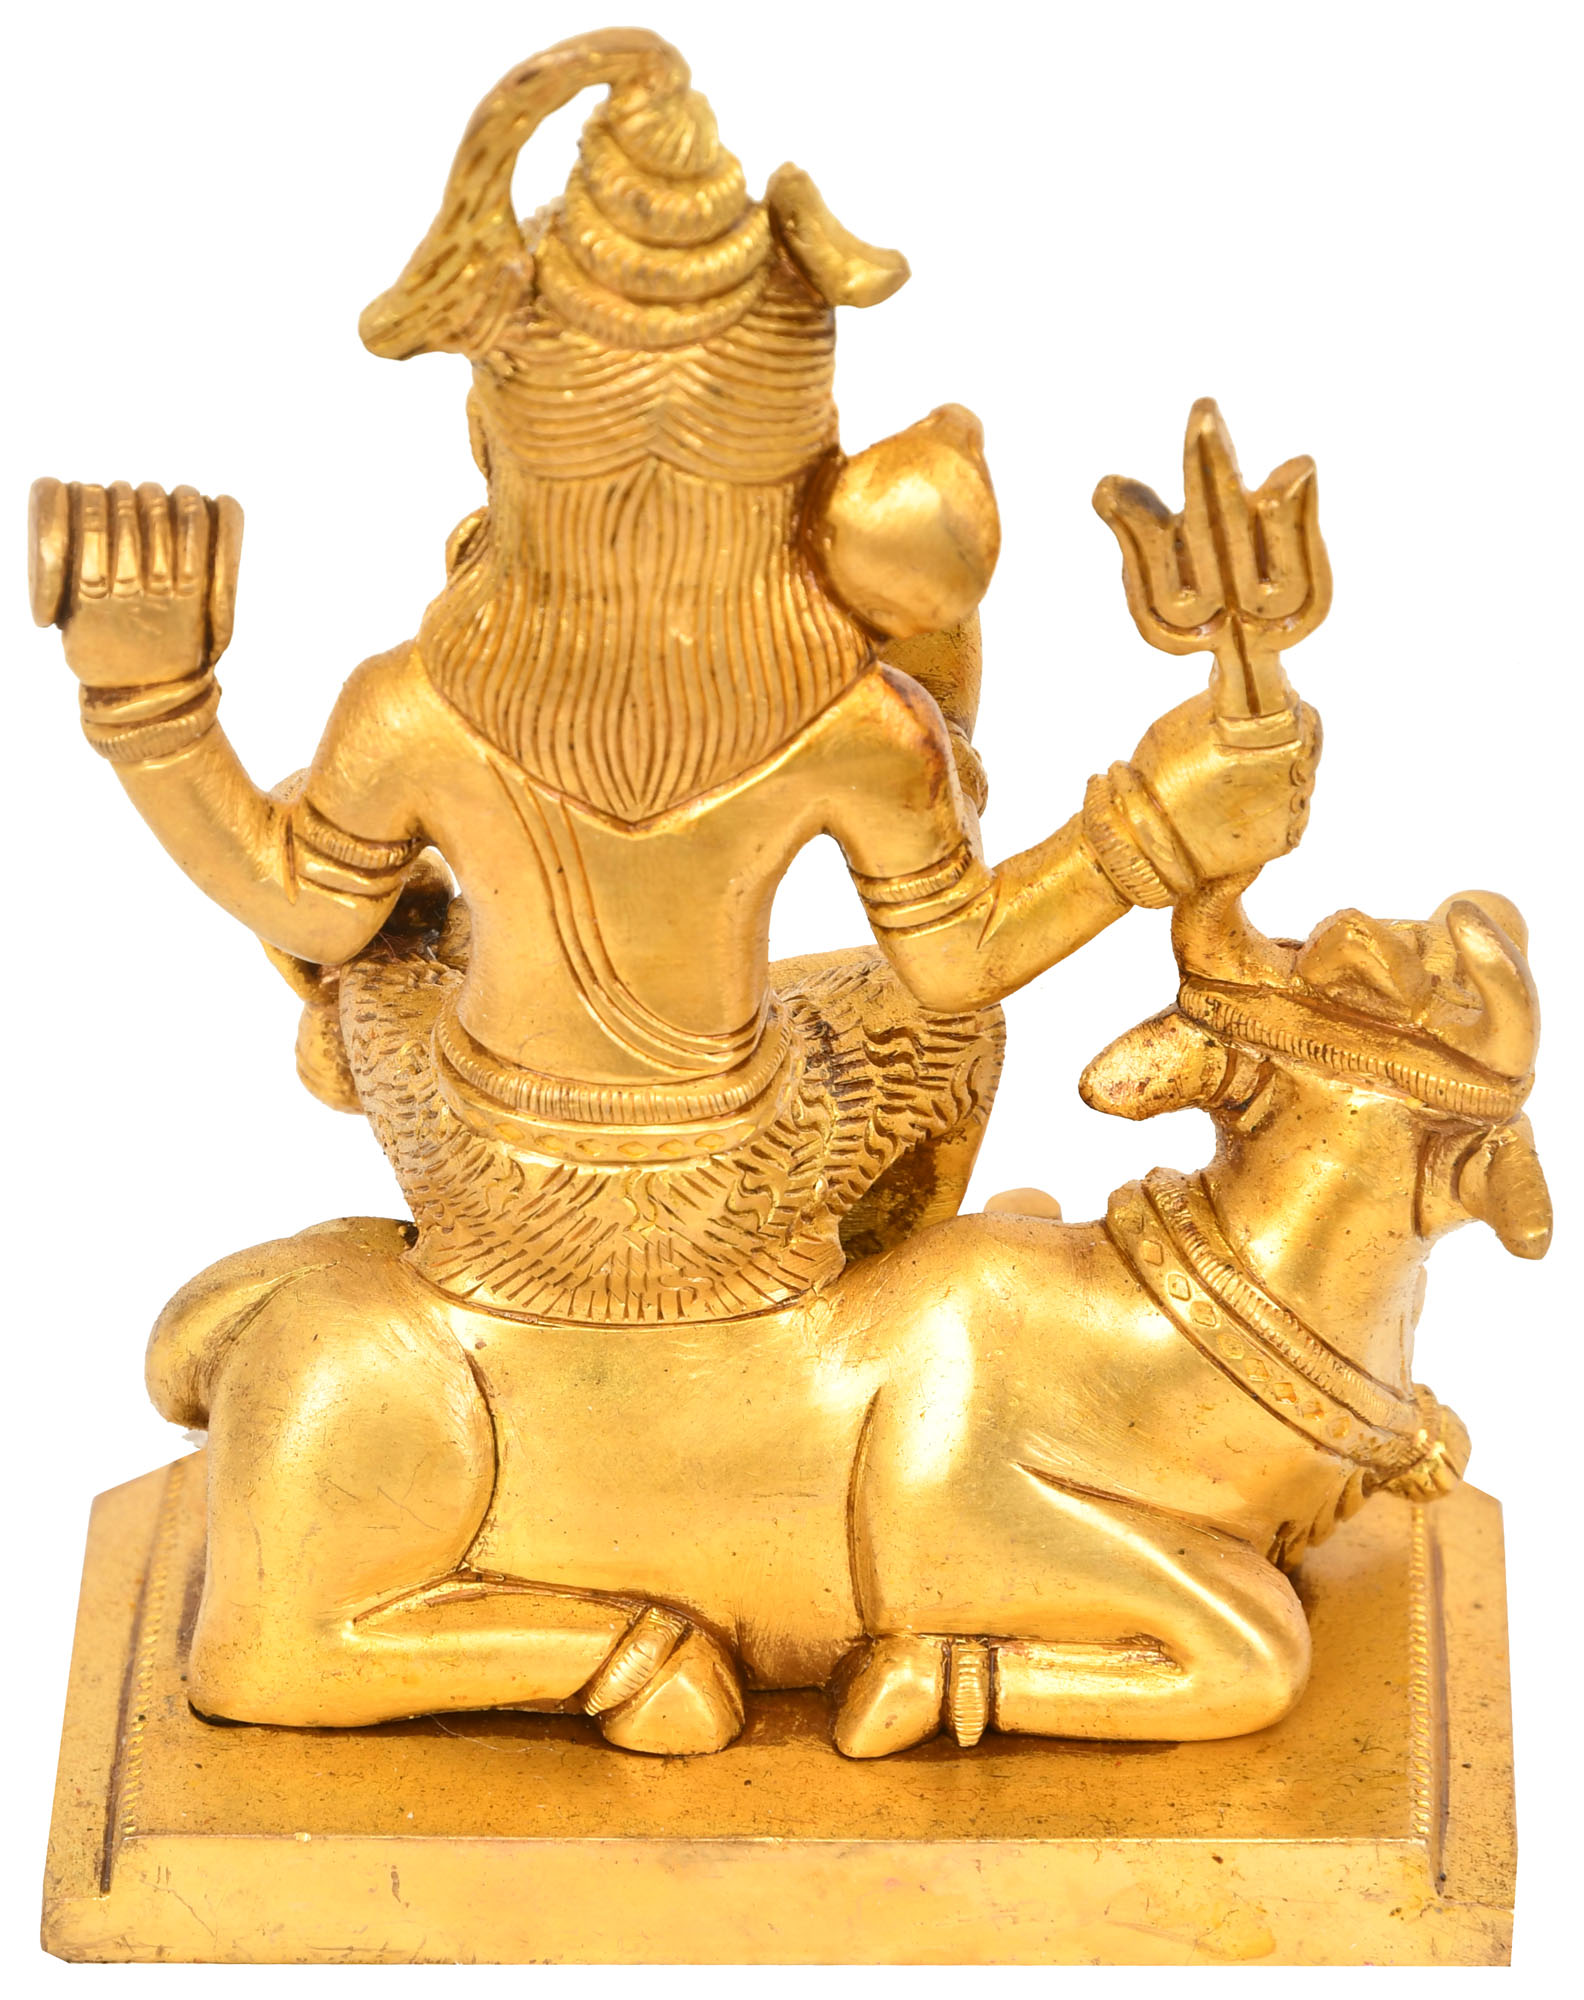 5 Lord Shiva Seated On Nandi With Shiva Linga In Brass Handmade